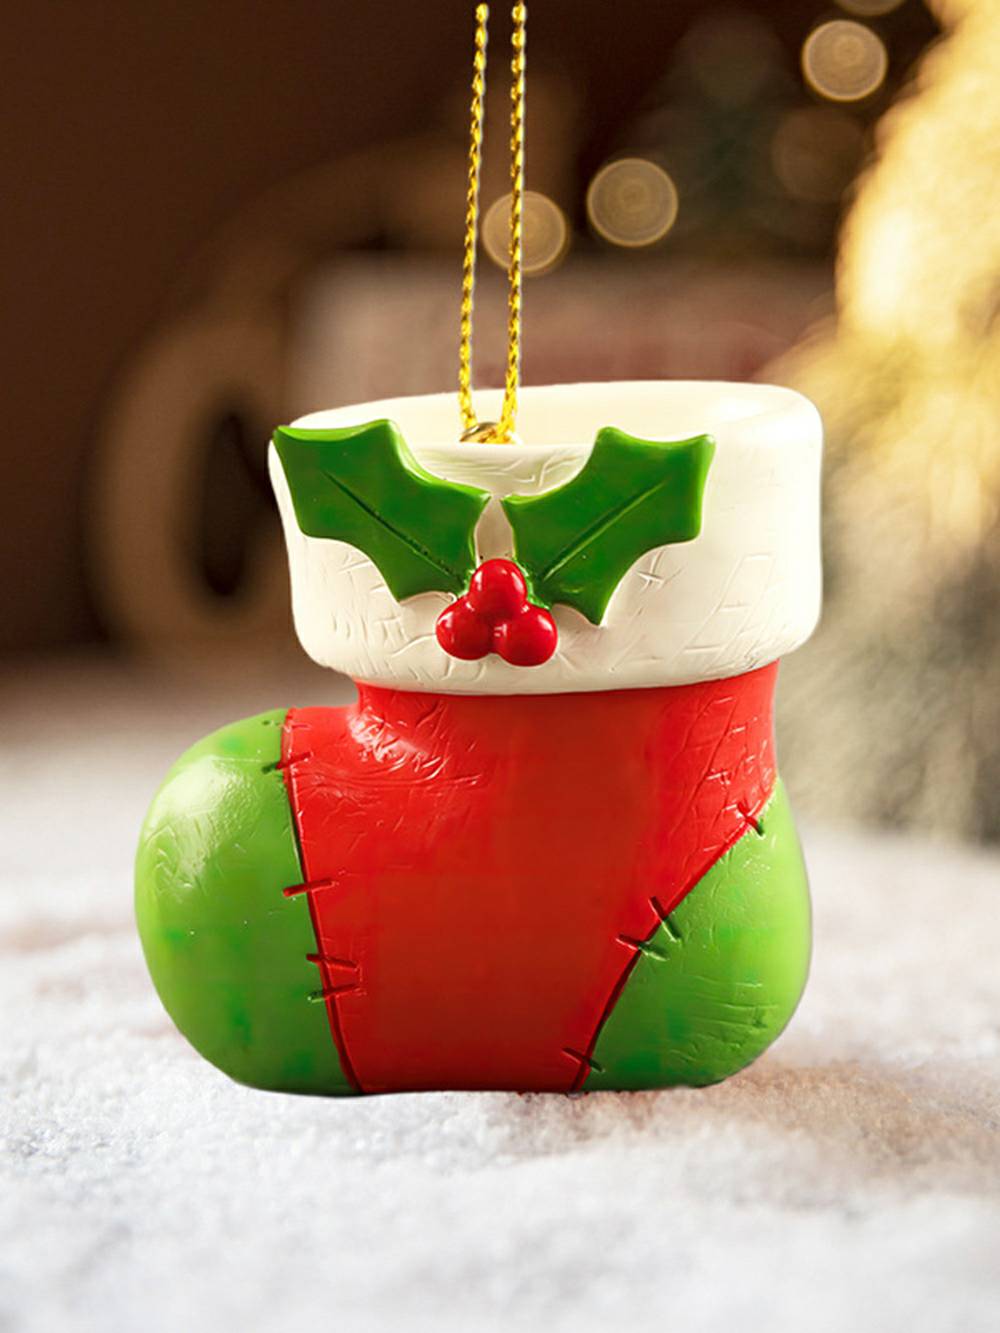 Chrëschtdag Resin Reindeer Gingerbread Man Santa Claus Ornament